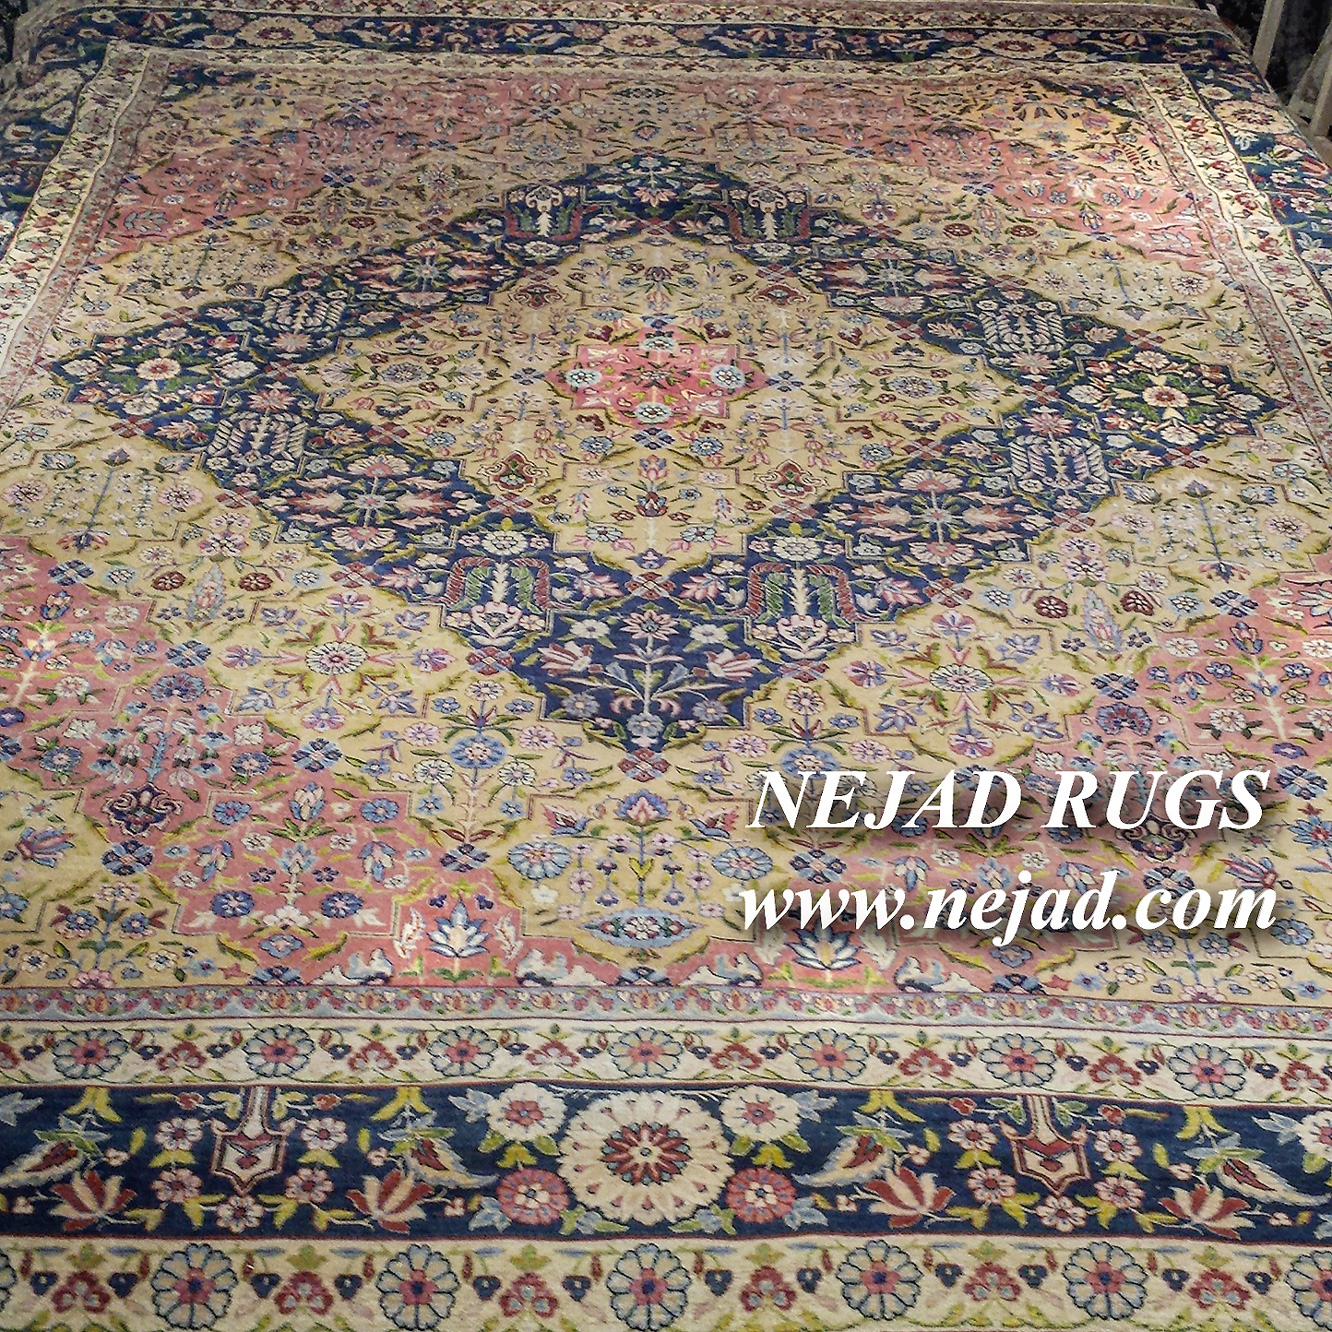 Antique Persian Kerman Rug - Nejad Rugs #987640